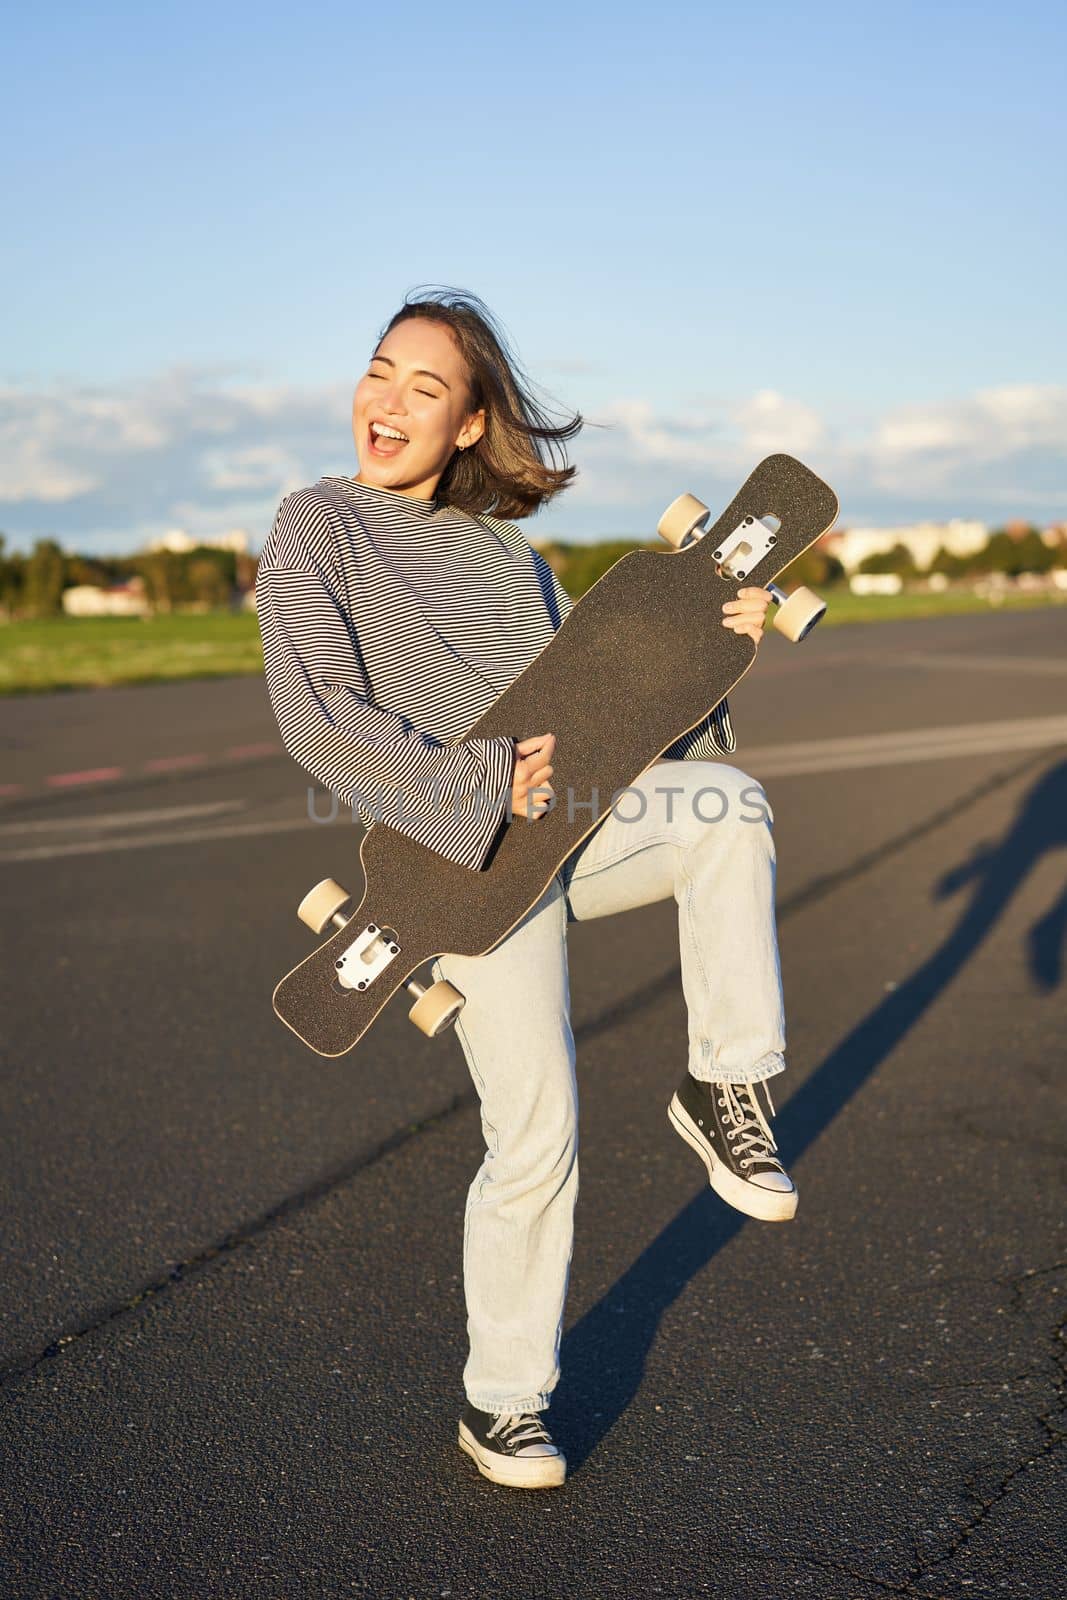 Funny asian girl enjoying skating, holding skateboard like guitar and shadow playing, having fun outdoors.